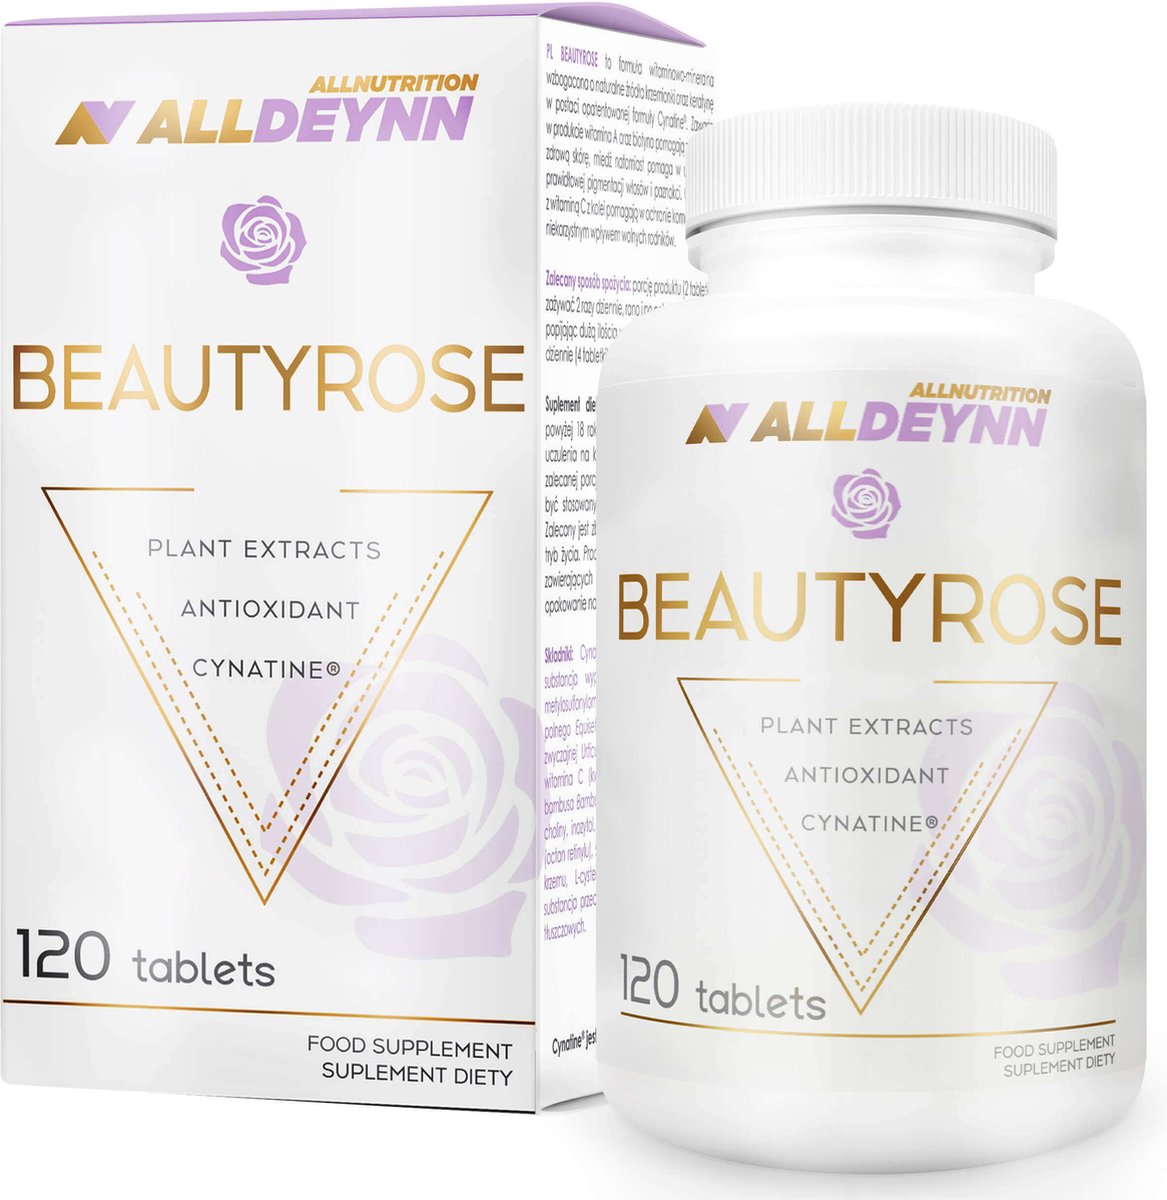 Alldeynn | Beautyrose | Tabletten | Plantenextract | 120 stuks | Avond formule voor betere nachtrust en beter herstel | komt voor in Huid | Nagels | Haar | Nutriworld - Alldeynn